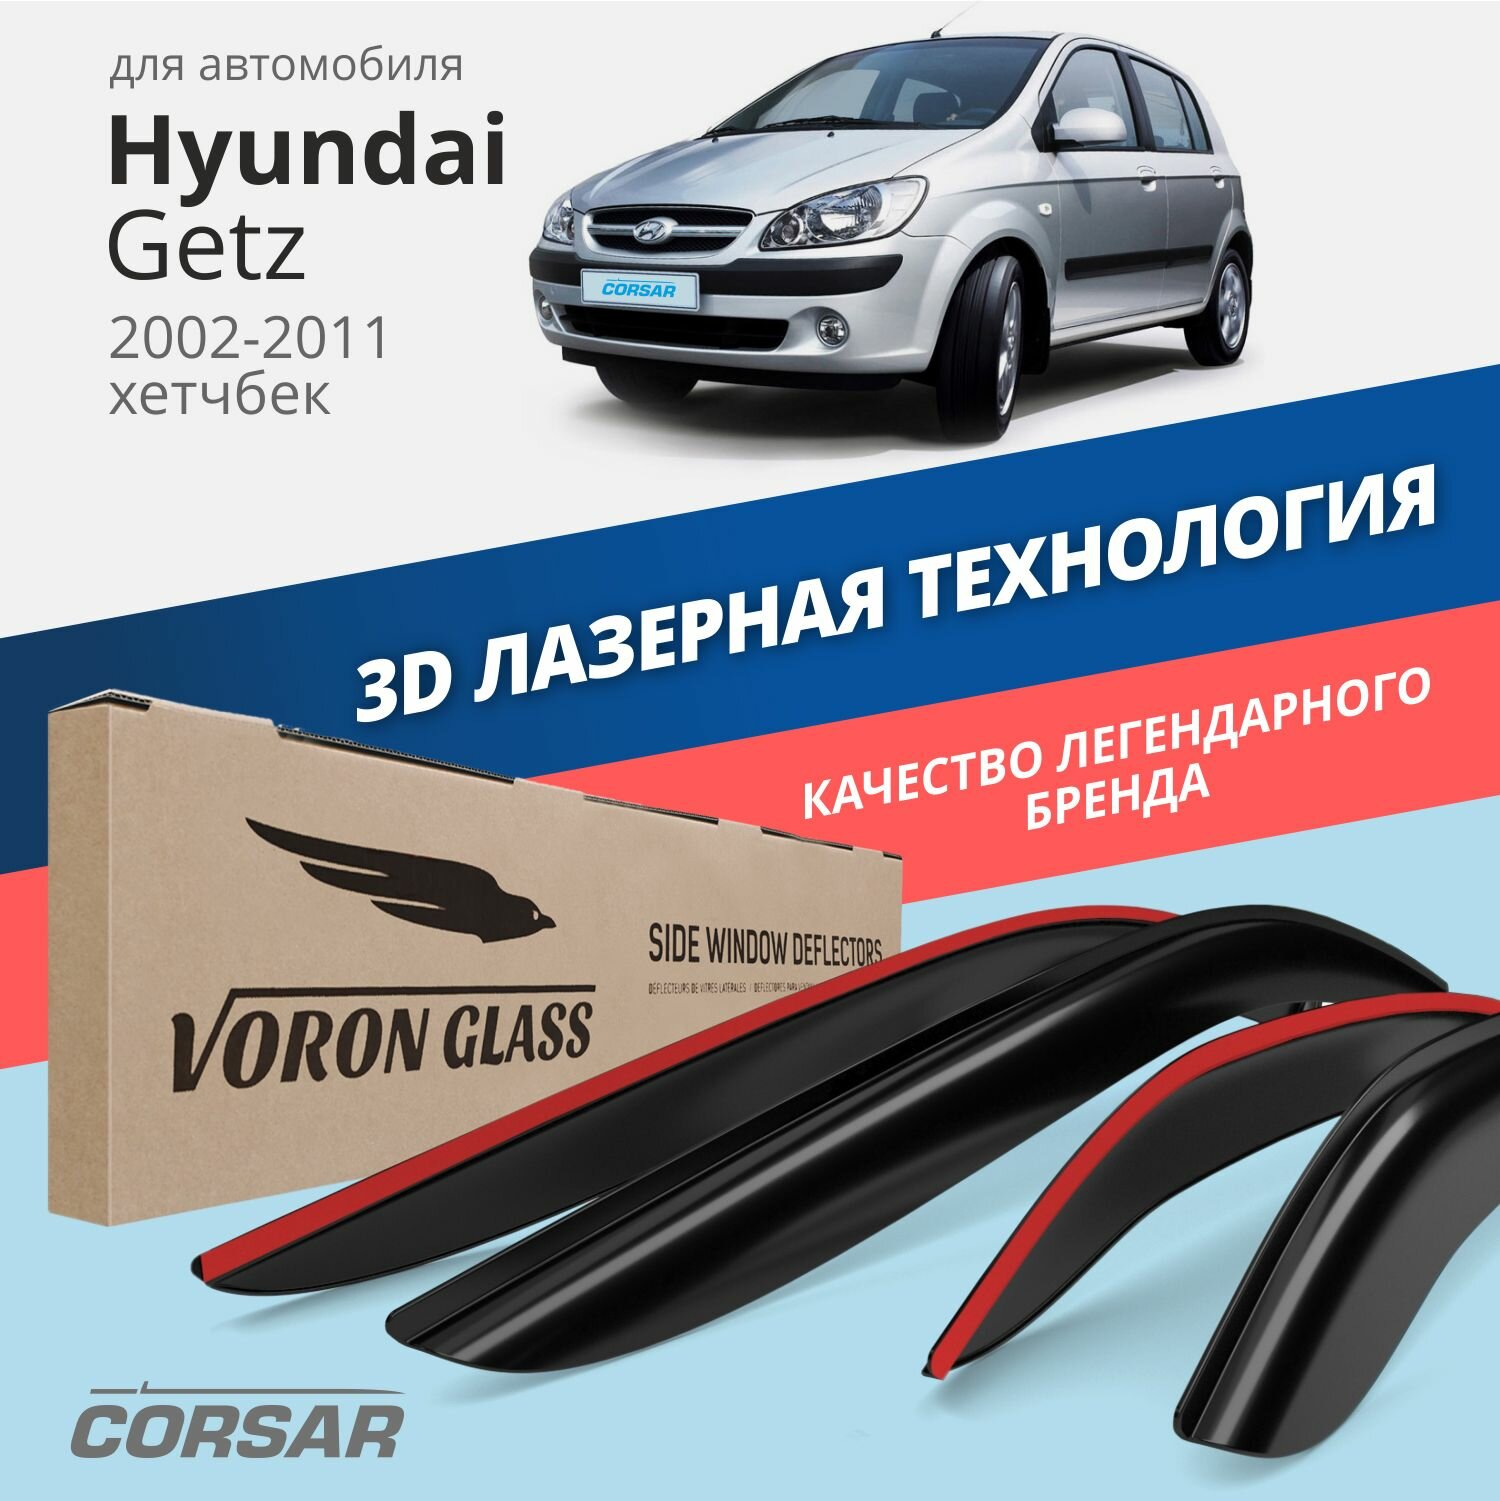 Дефлекторы на окна Voron Glass CORSAR Hyundai Getz 2002-2011, комплект 4шт, - фото №1